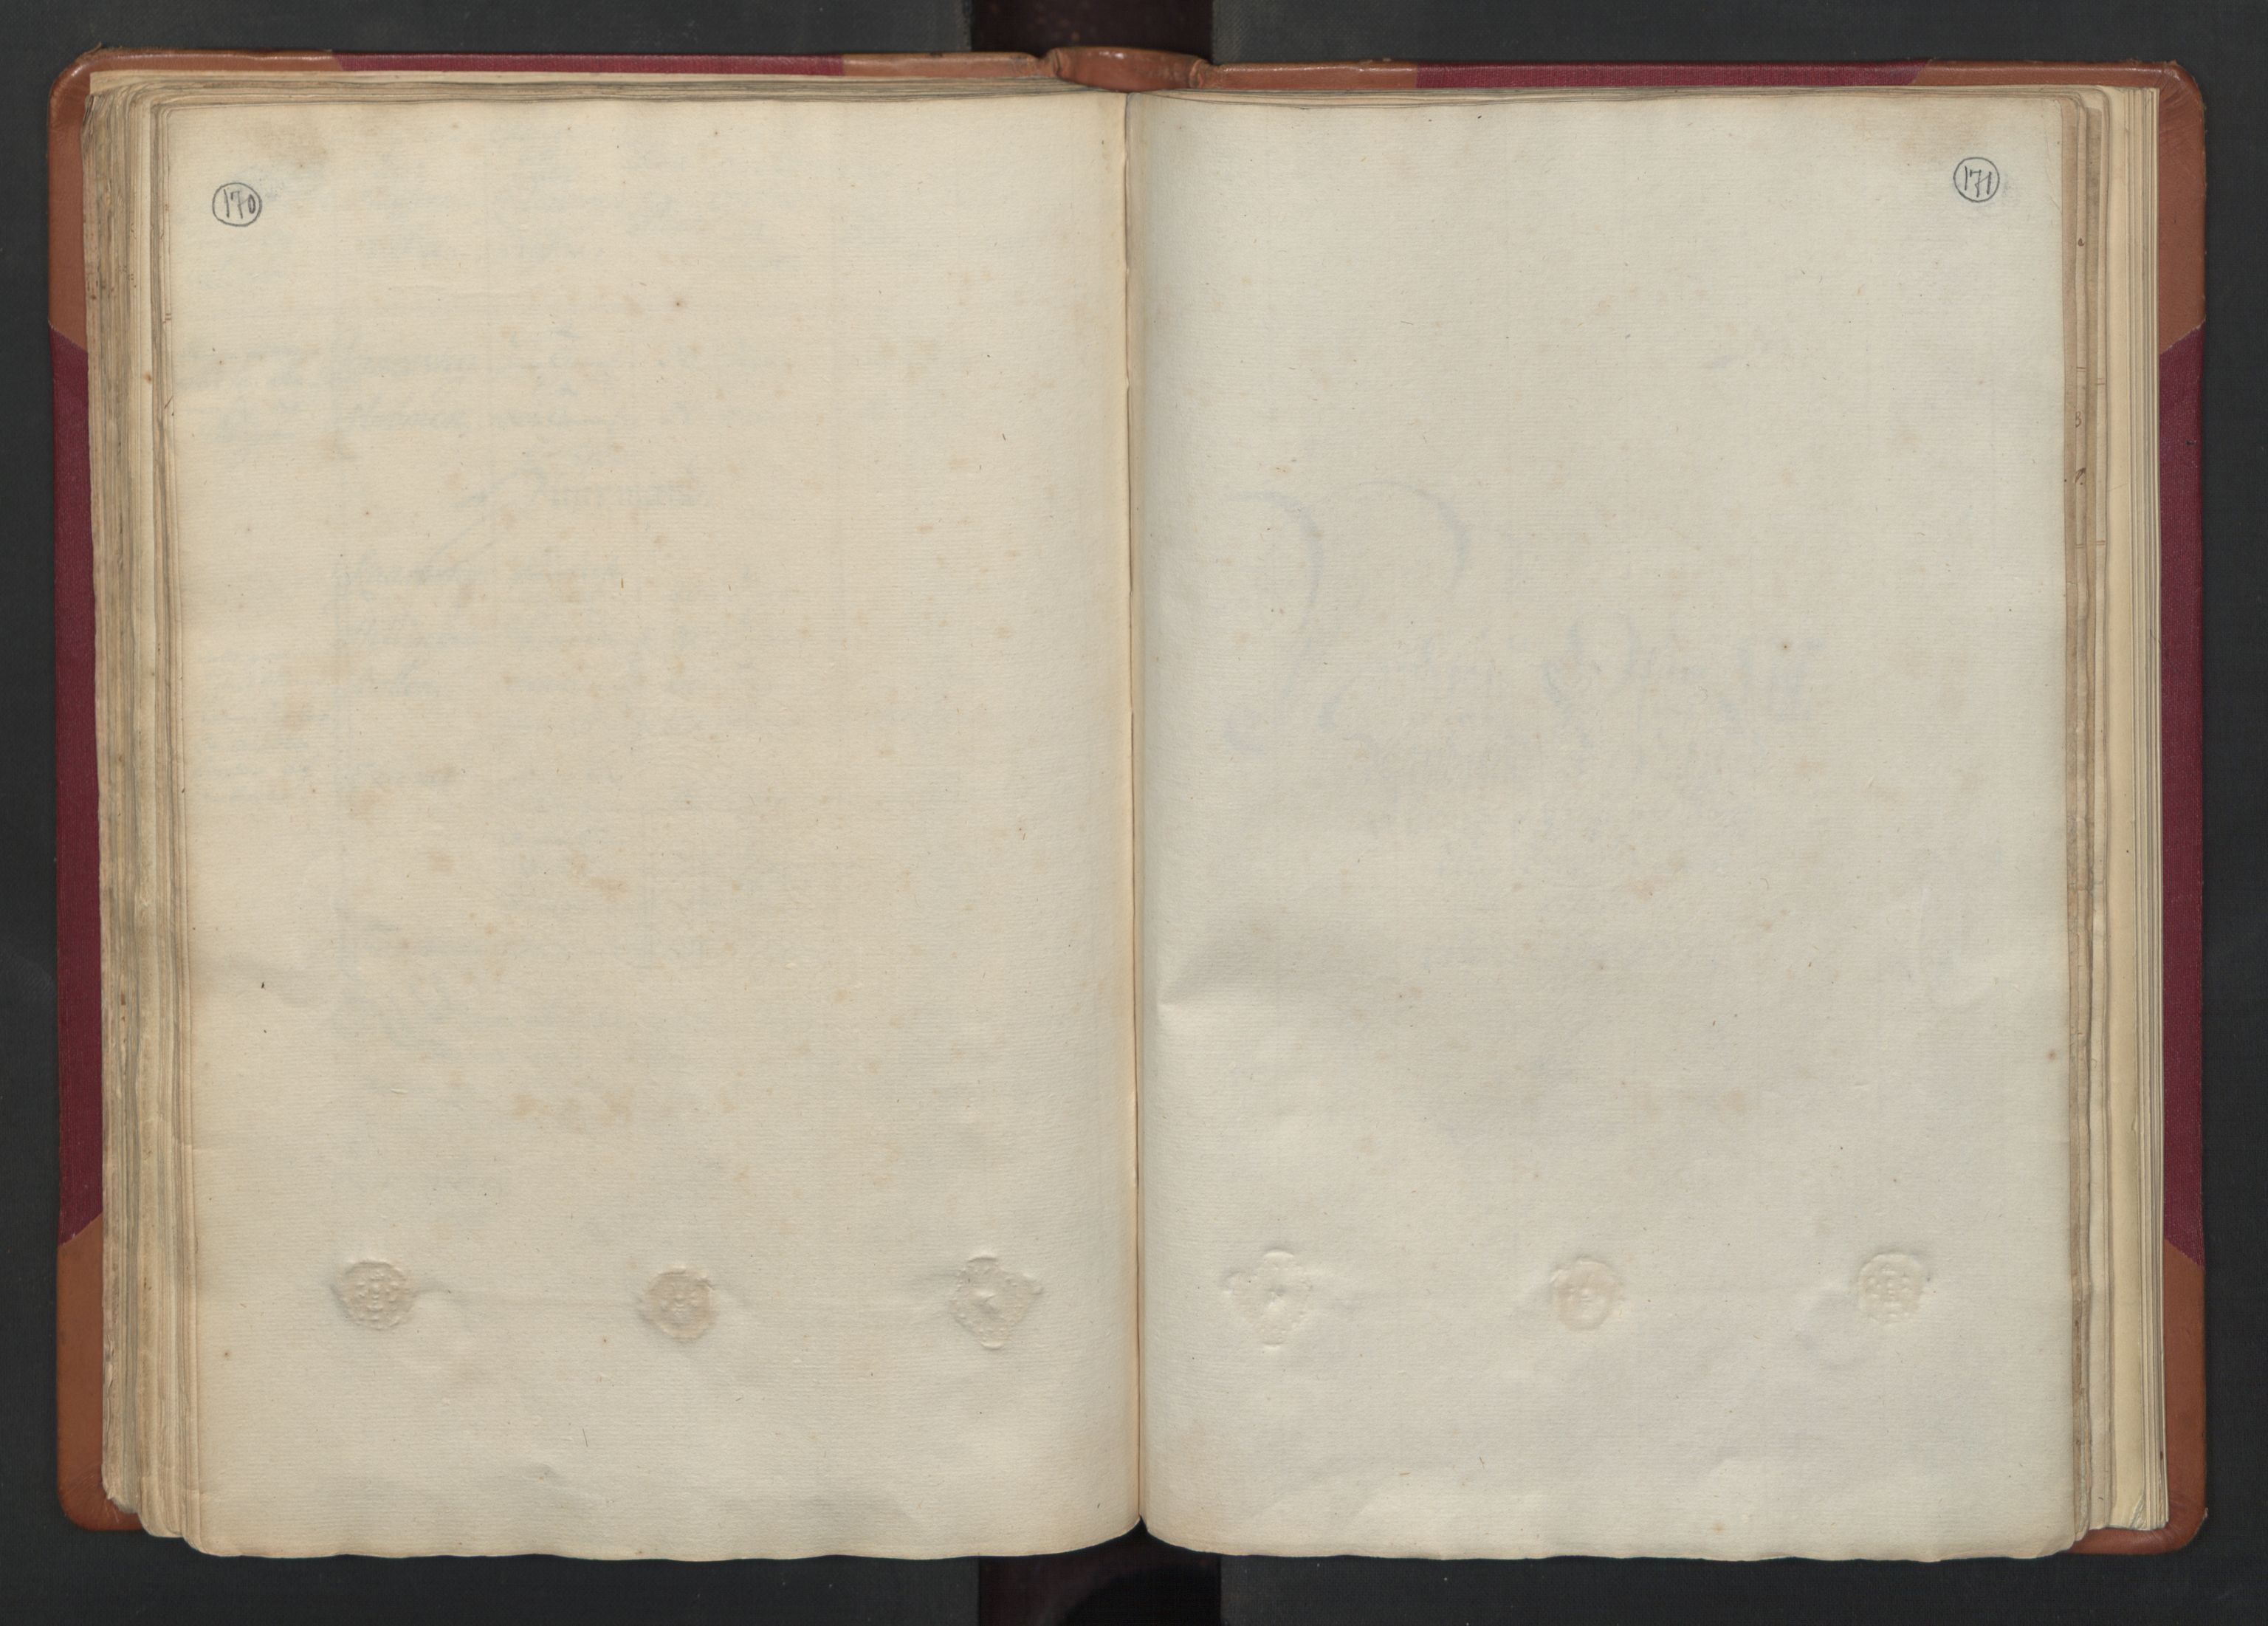 RA, Manntallet 1701, nr. 17: Salten fogderi, 1701, s. 170-171